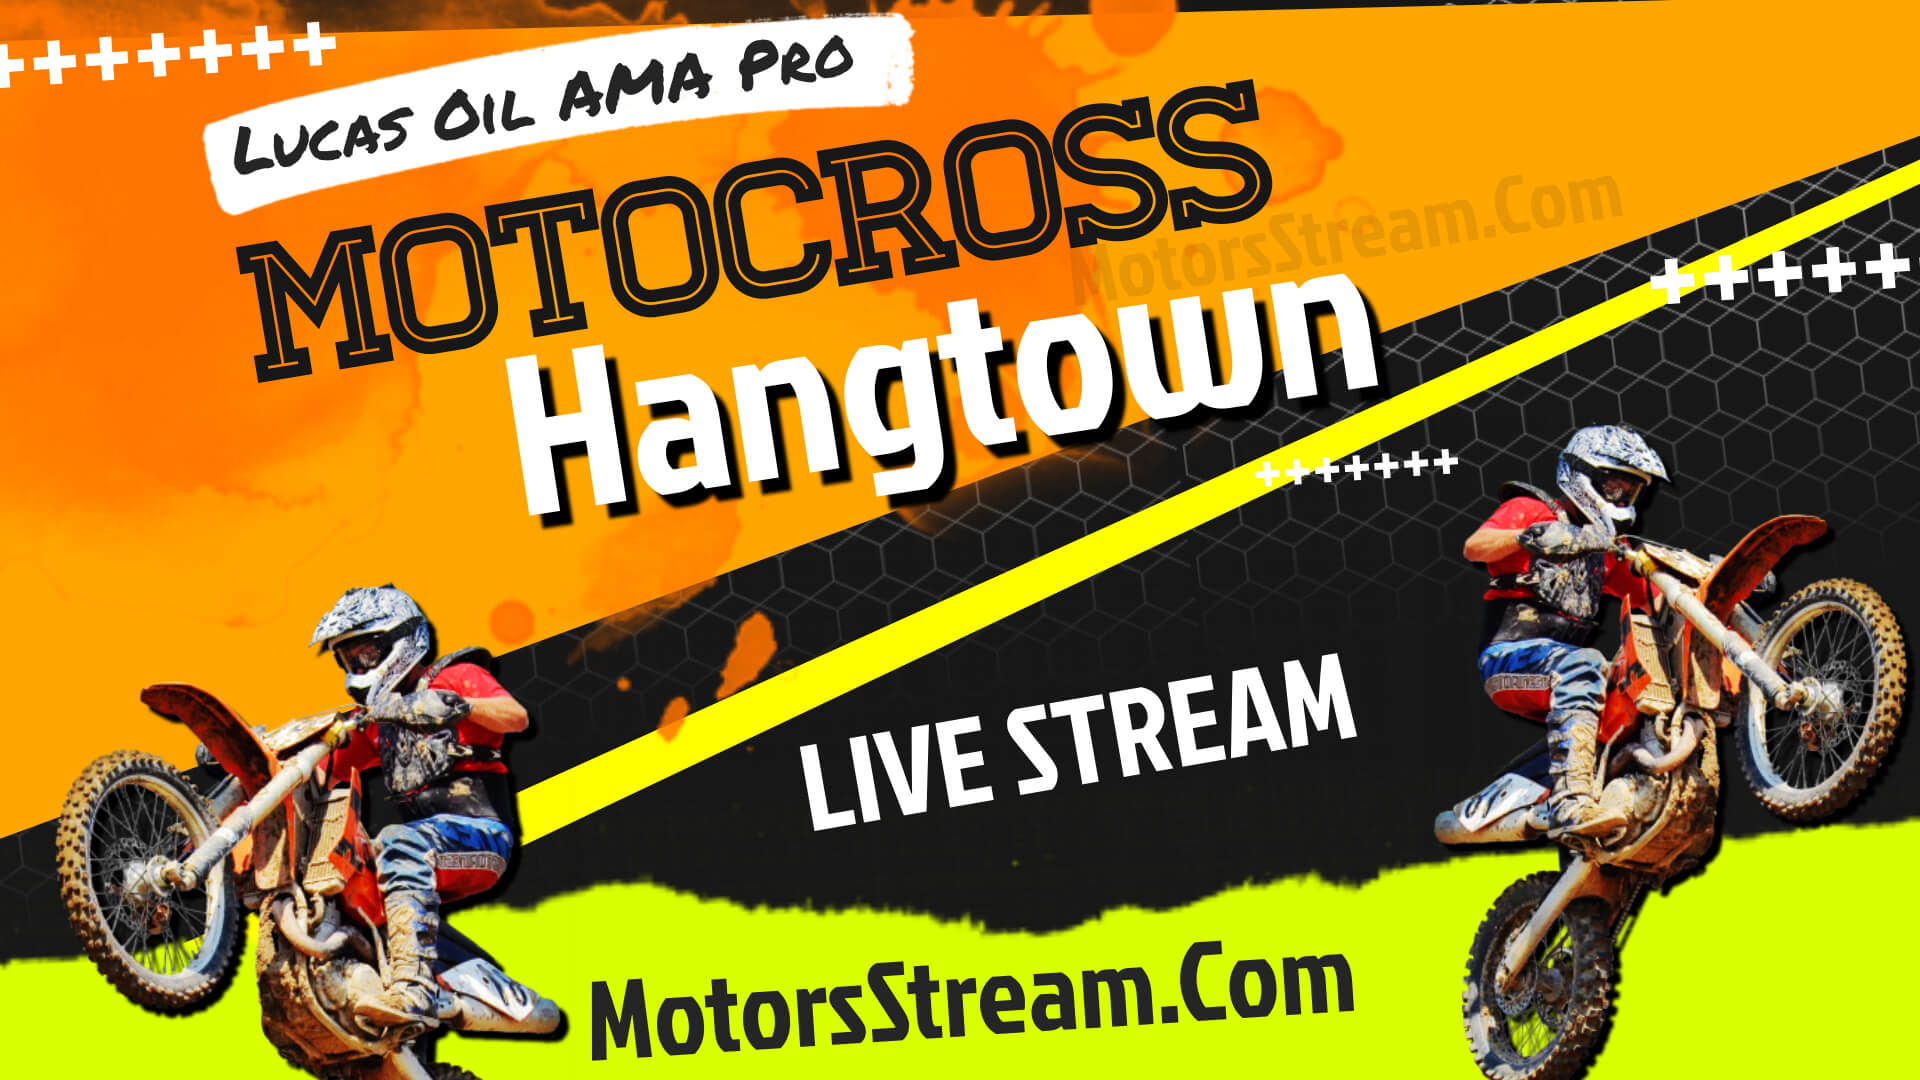 Hangtown National Live Stream 2022 Lucas Oil AMA Pro Motocross